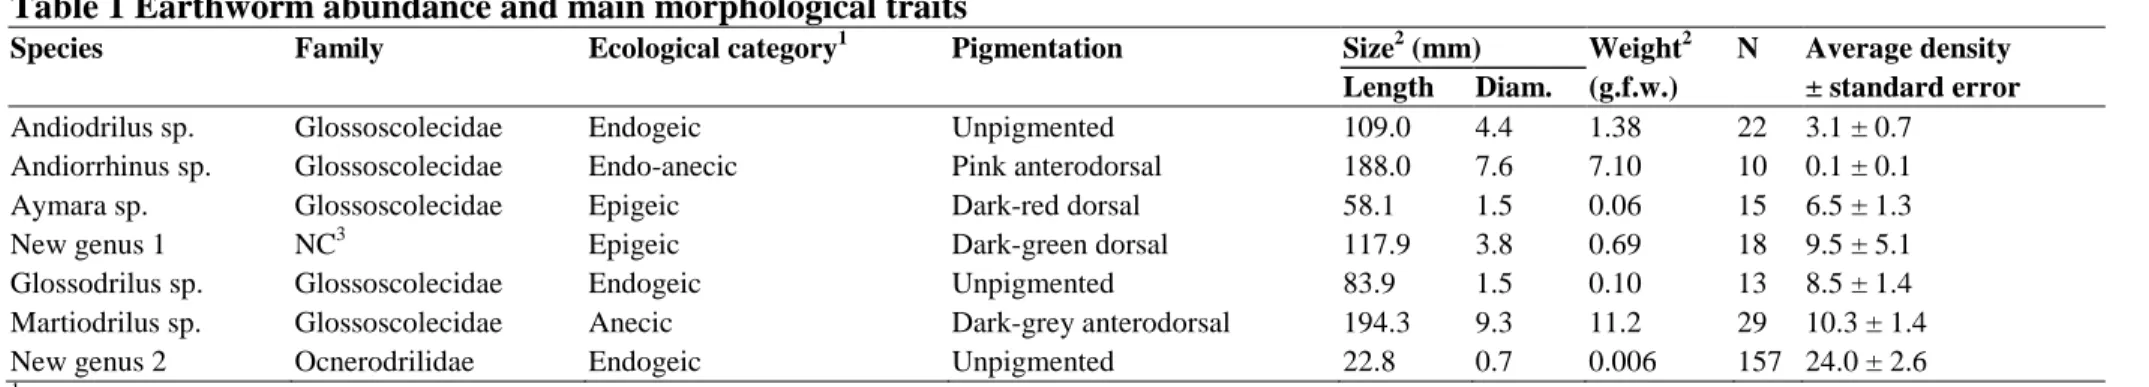 Table 1 Earthworm abundance and main morphological traits 